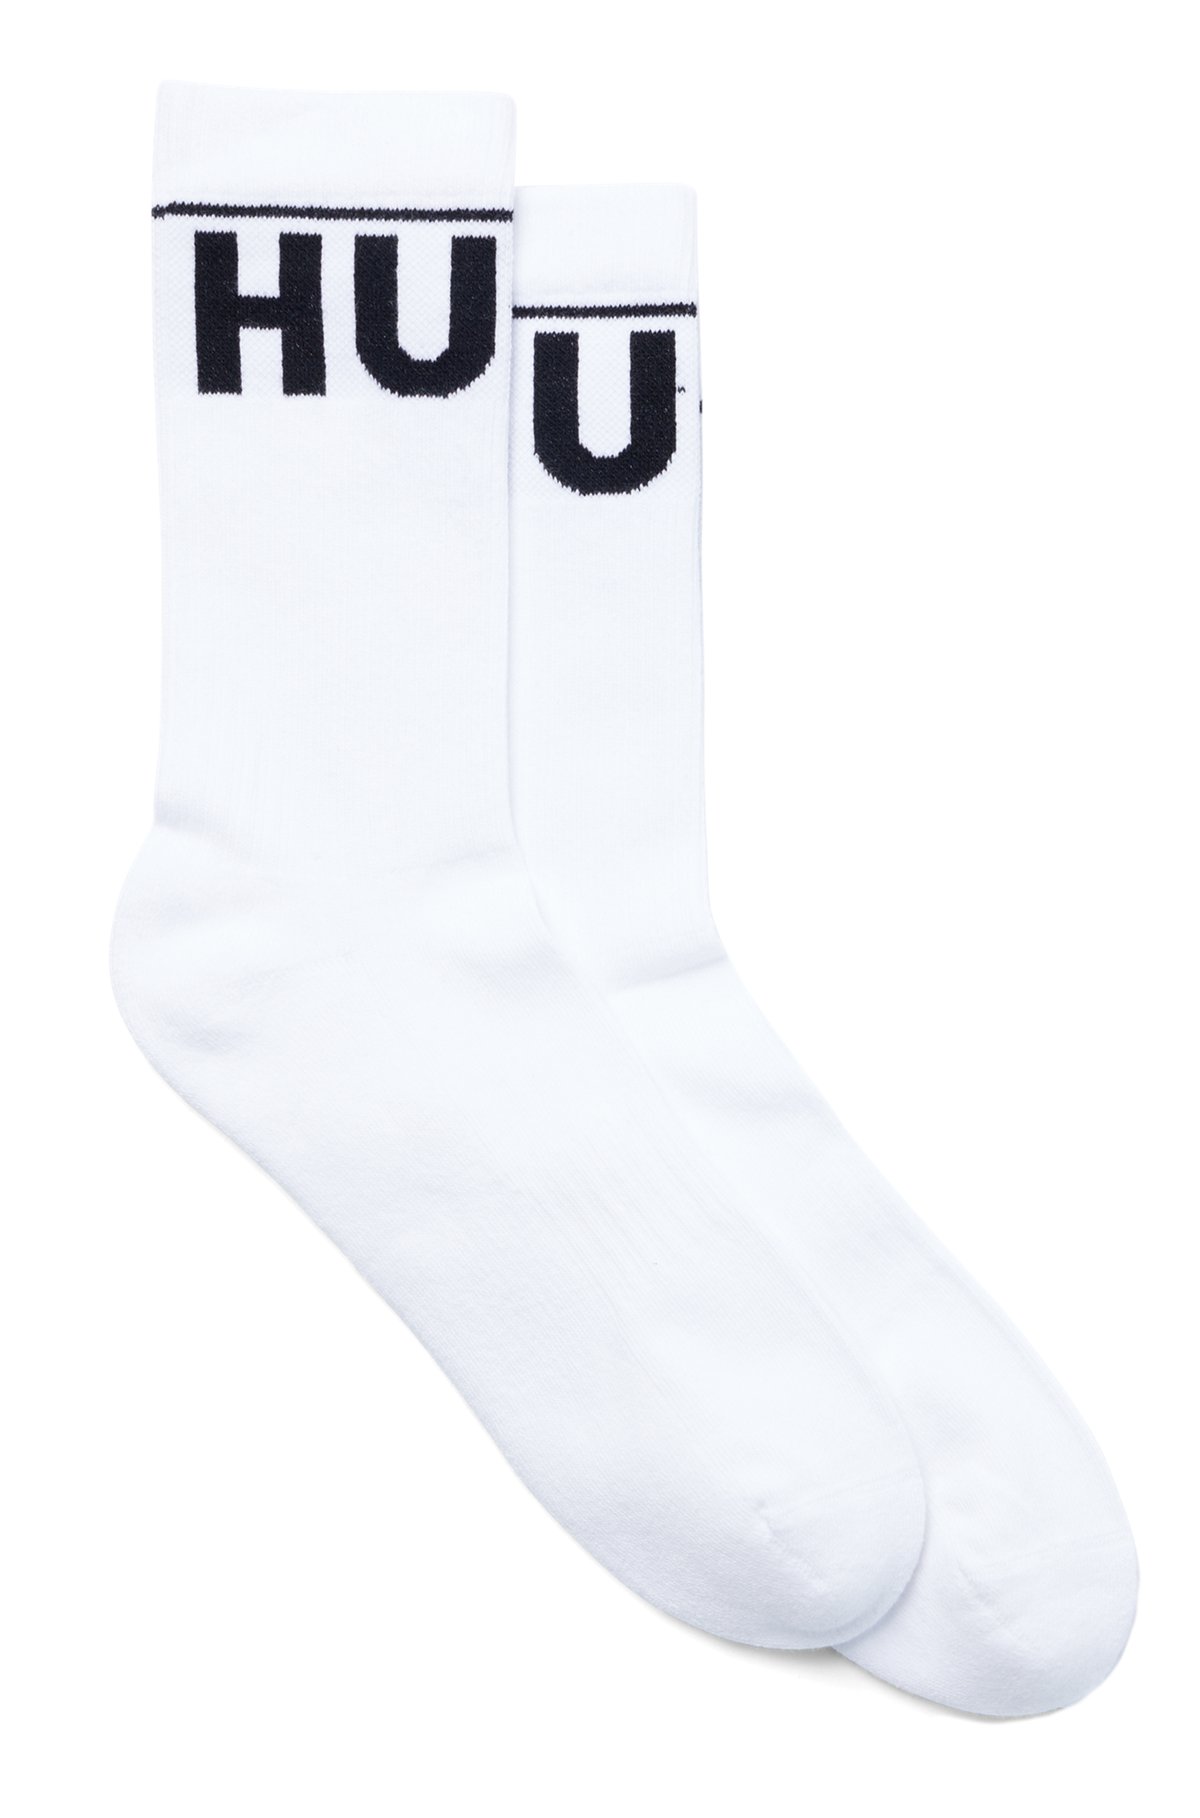 Zweier-Pack kurze Socken mit kontrastfarbenem Logo, Weiß